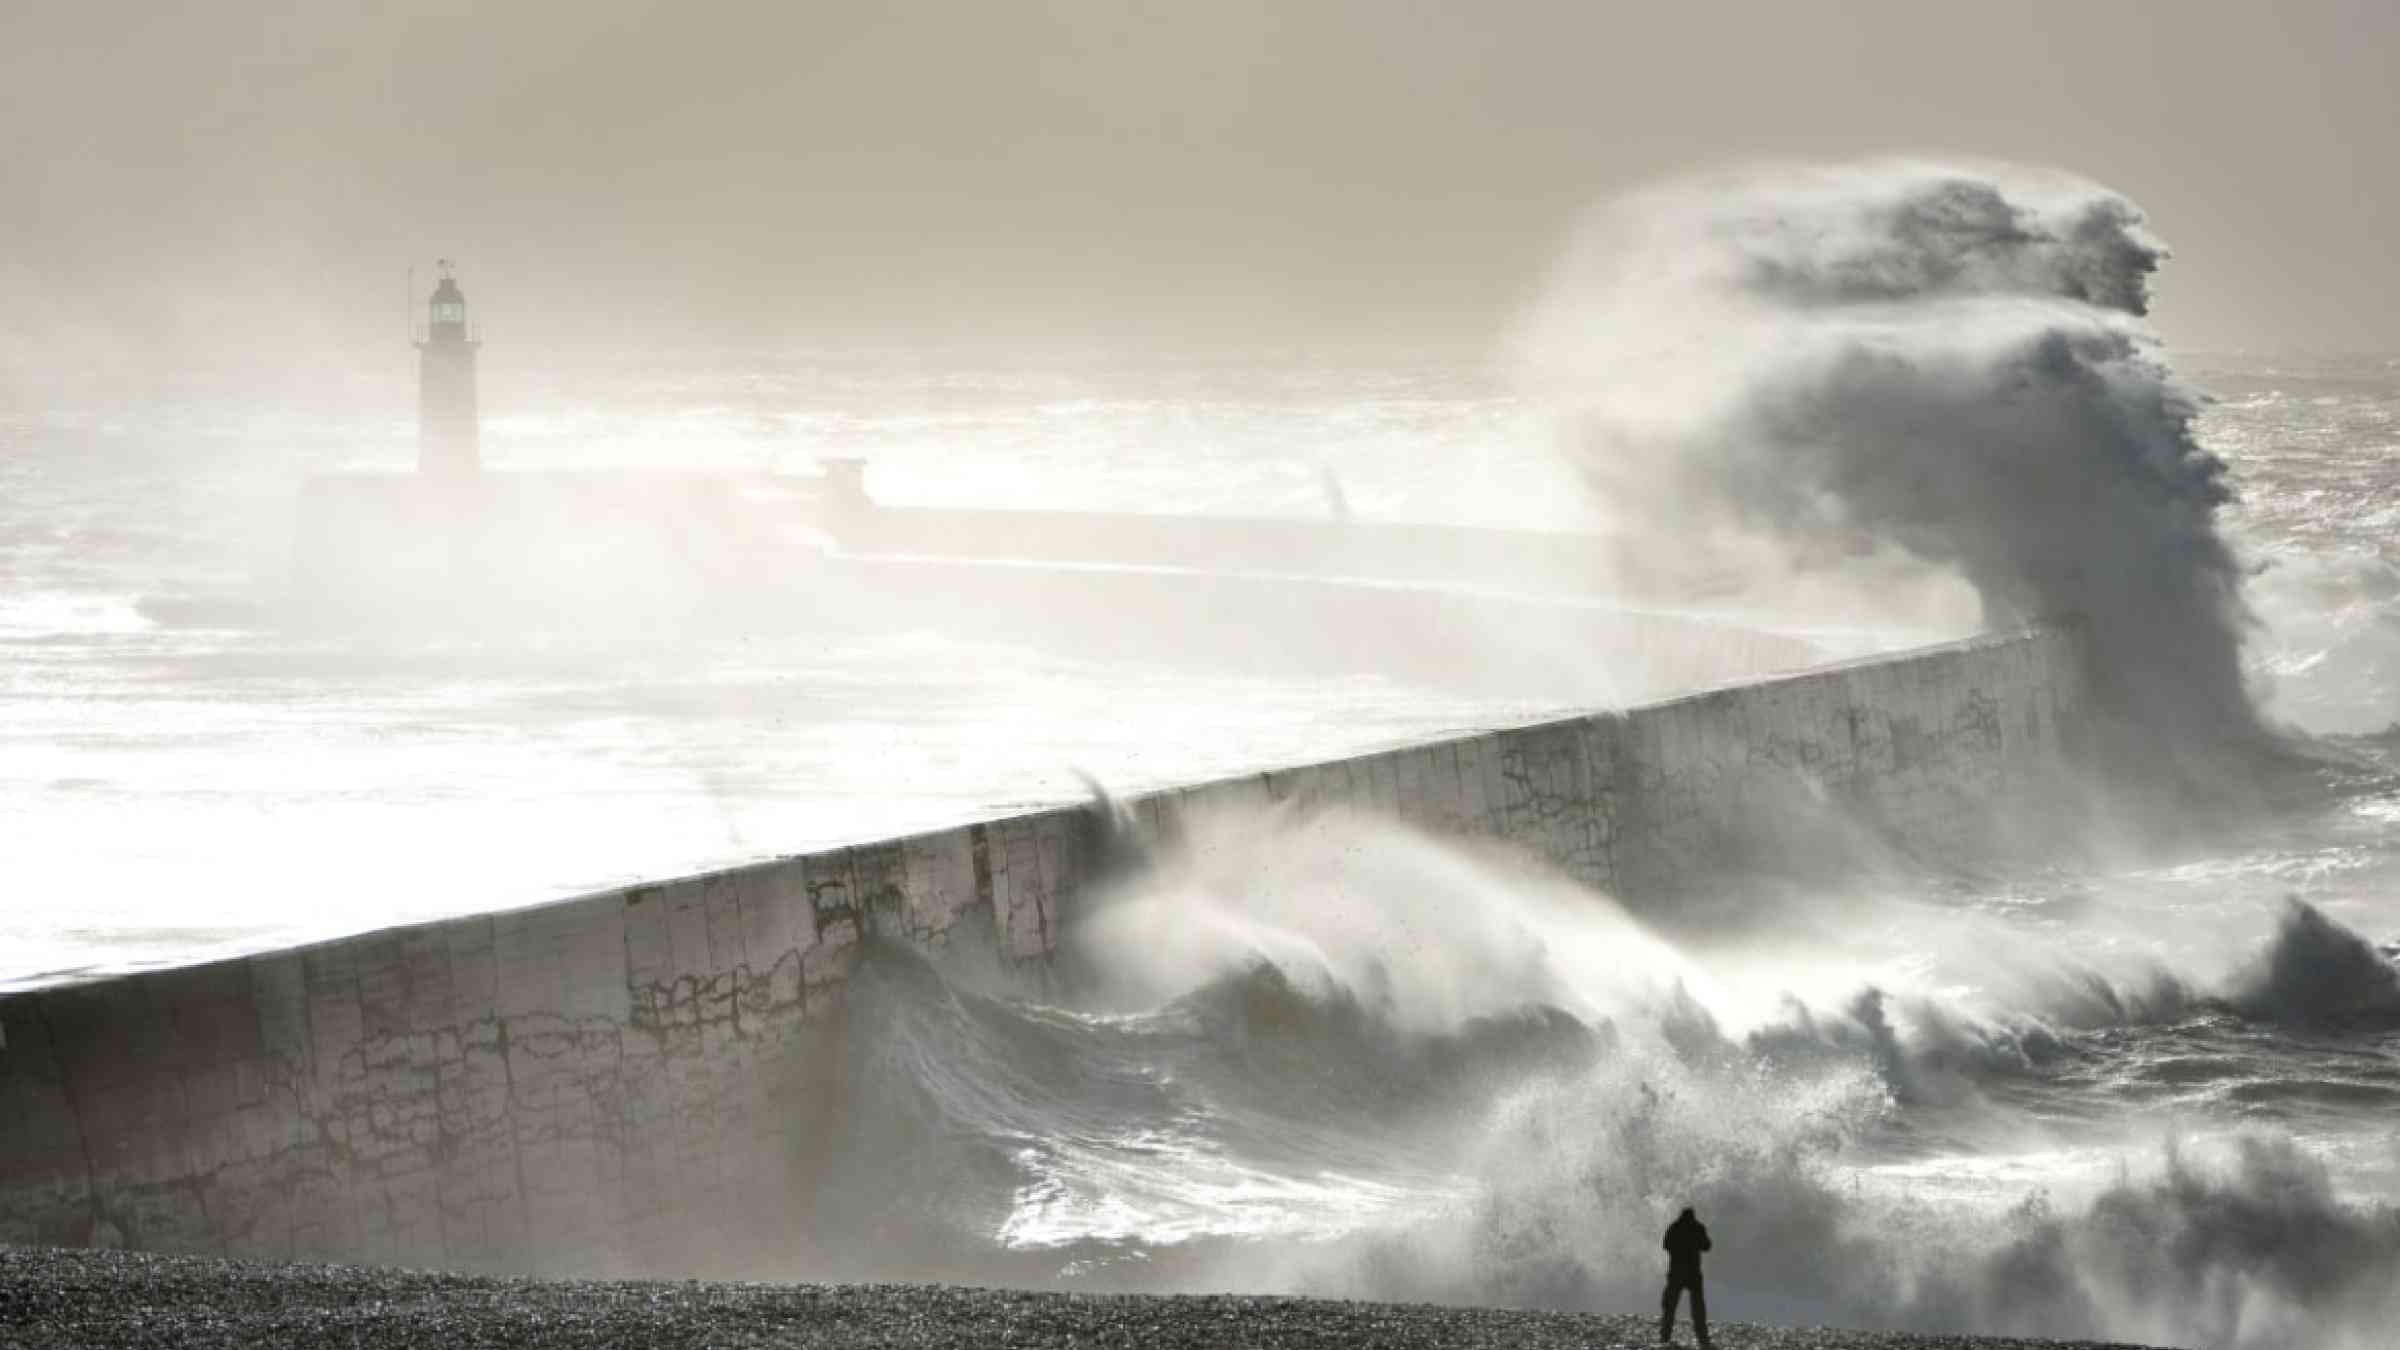 Huge waves striking Newhaven breakwater, UK, during a winter storm